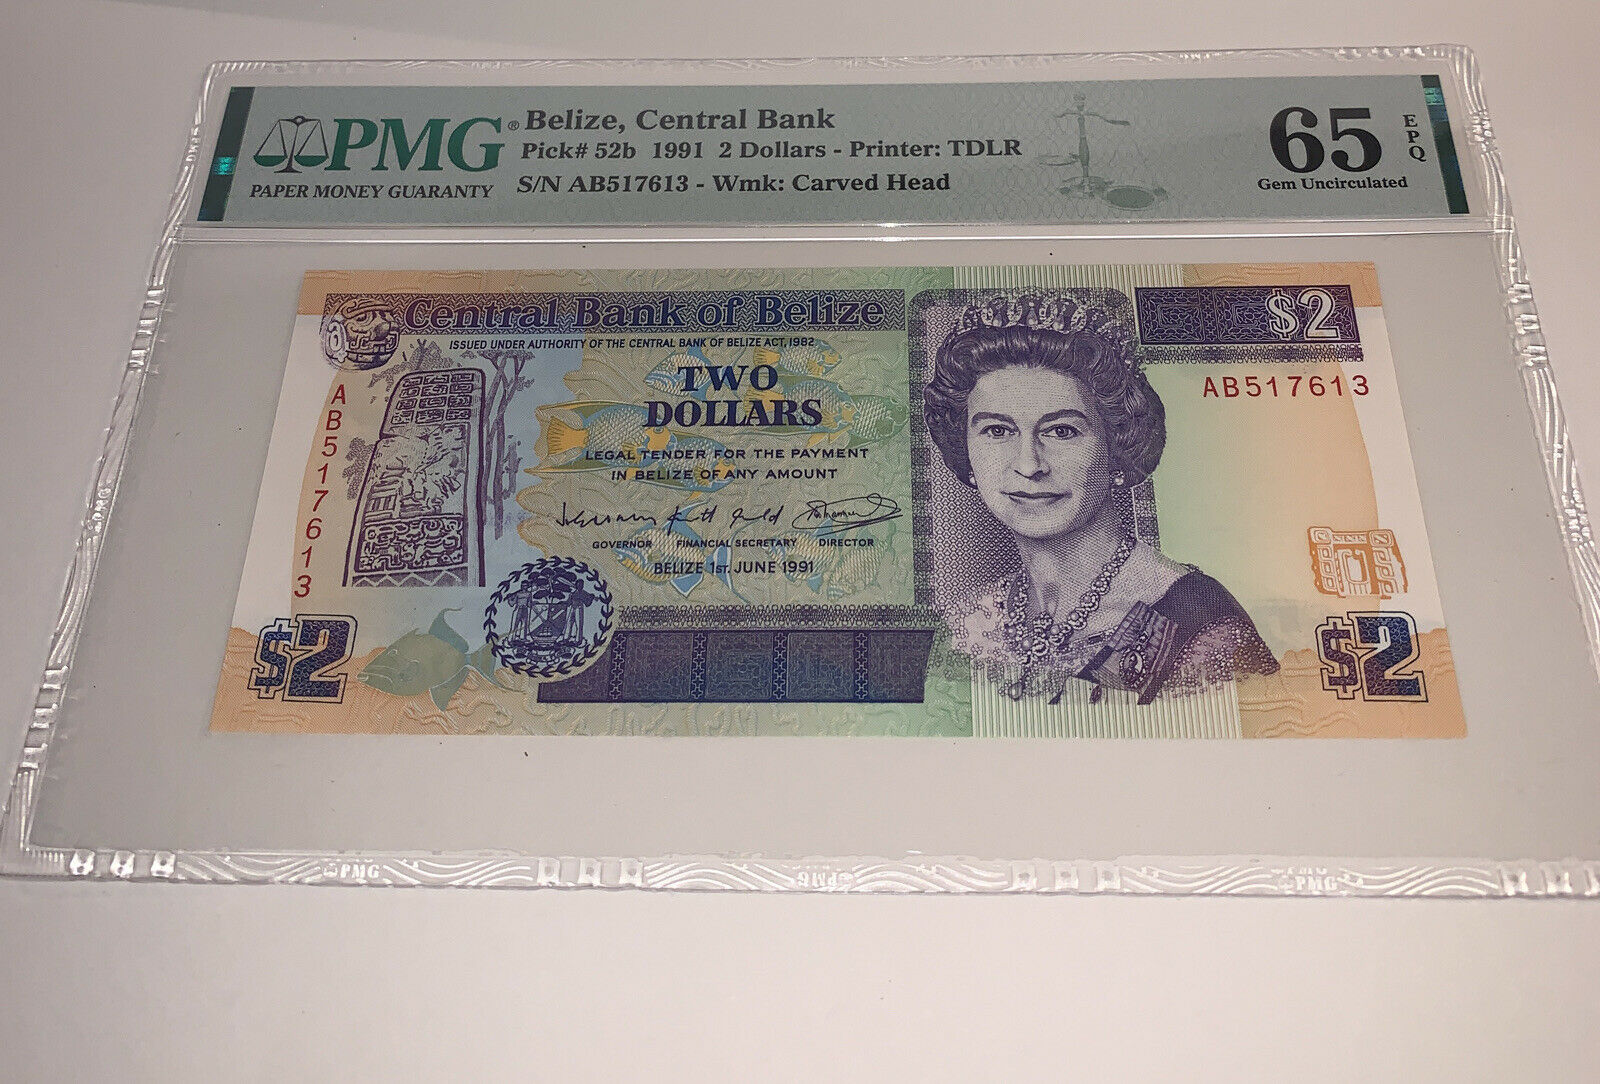 Pmg Belize, Central Bank $2 Banknote P52b 1991 Gem Unc